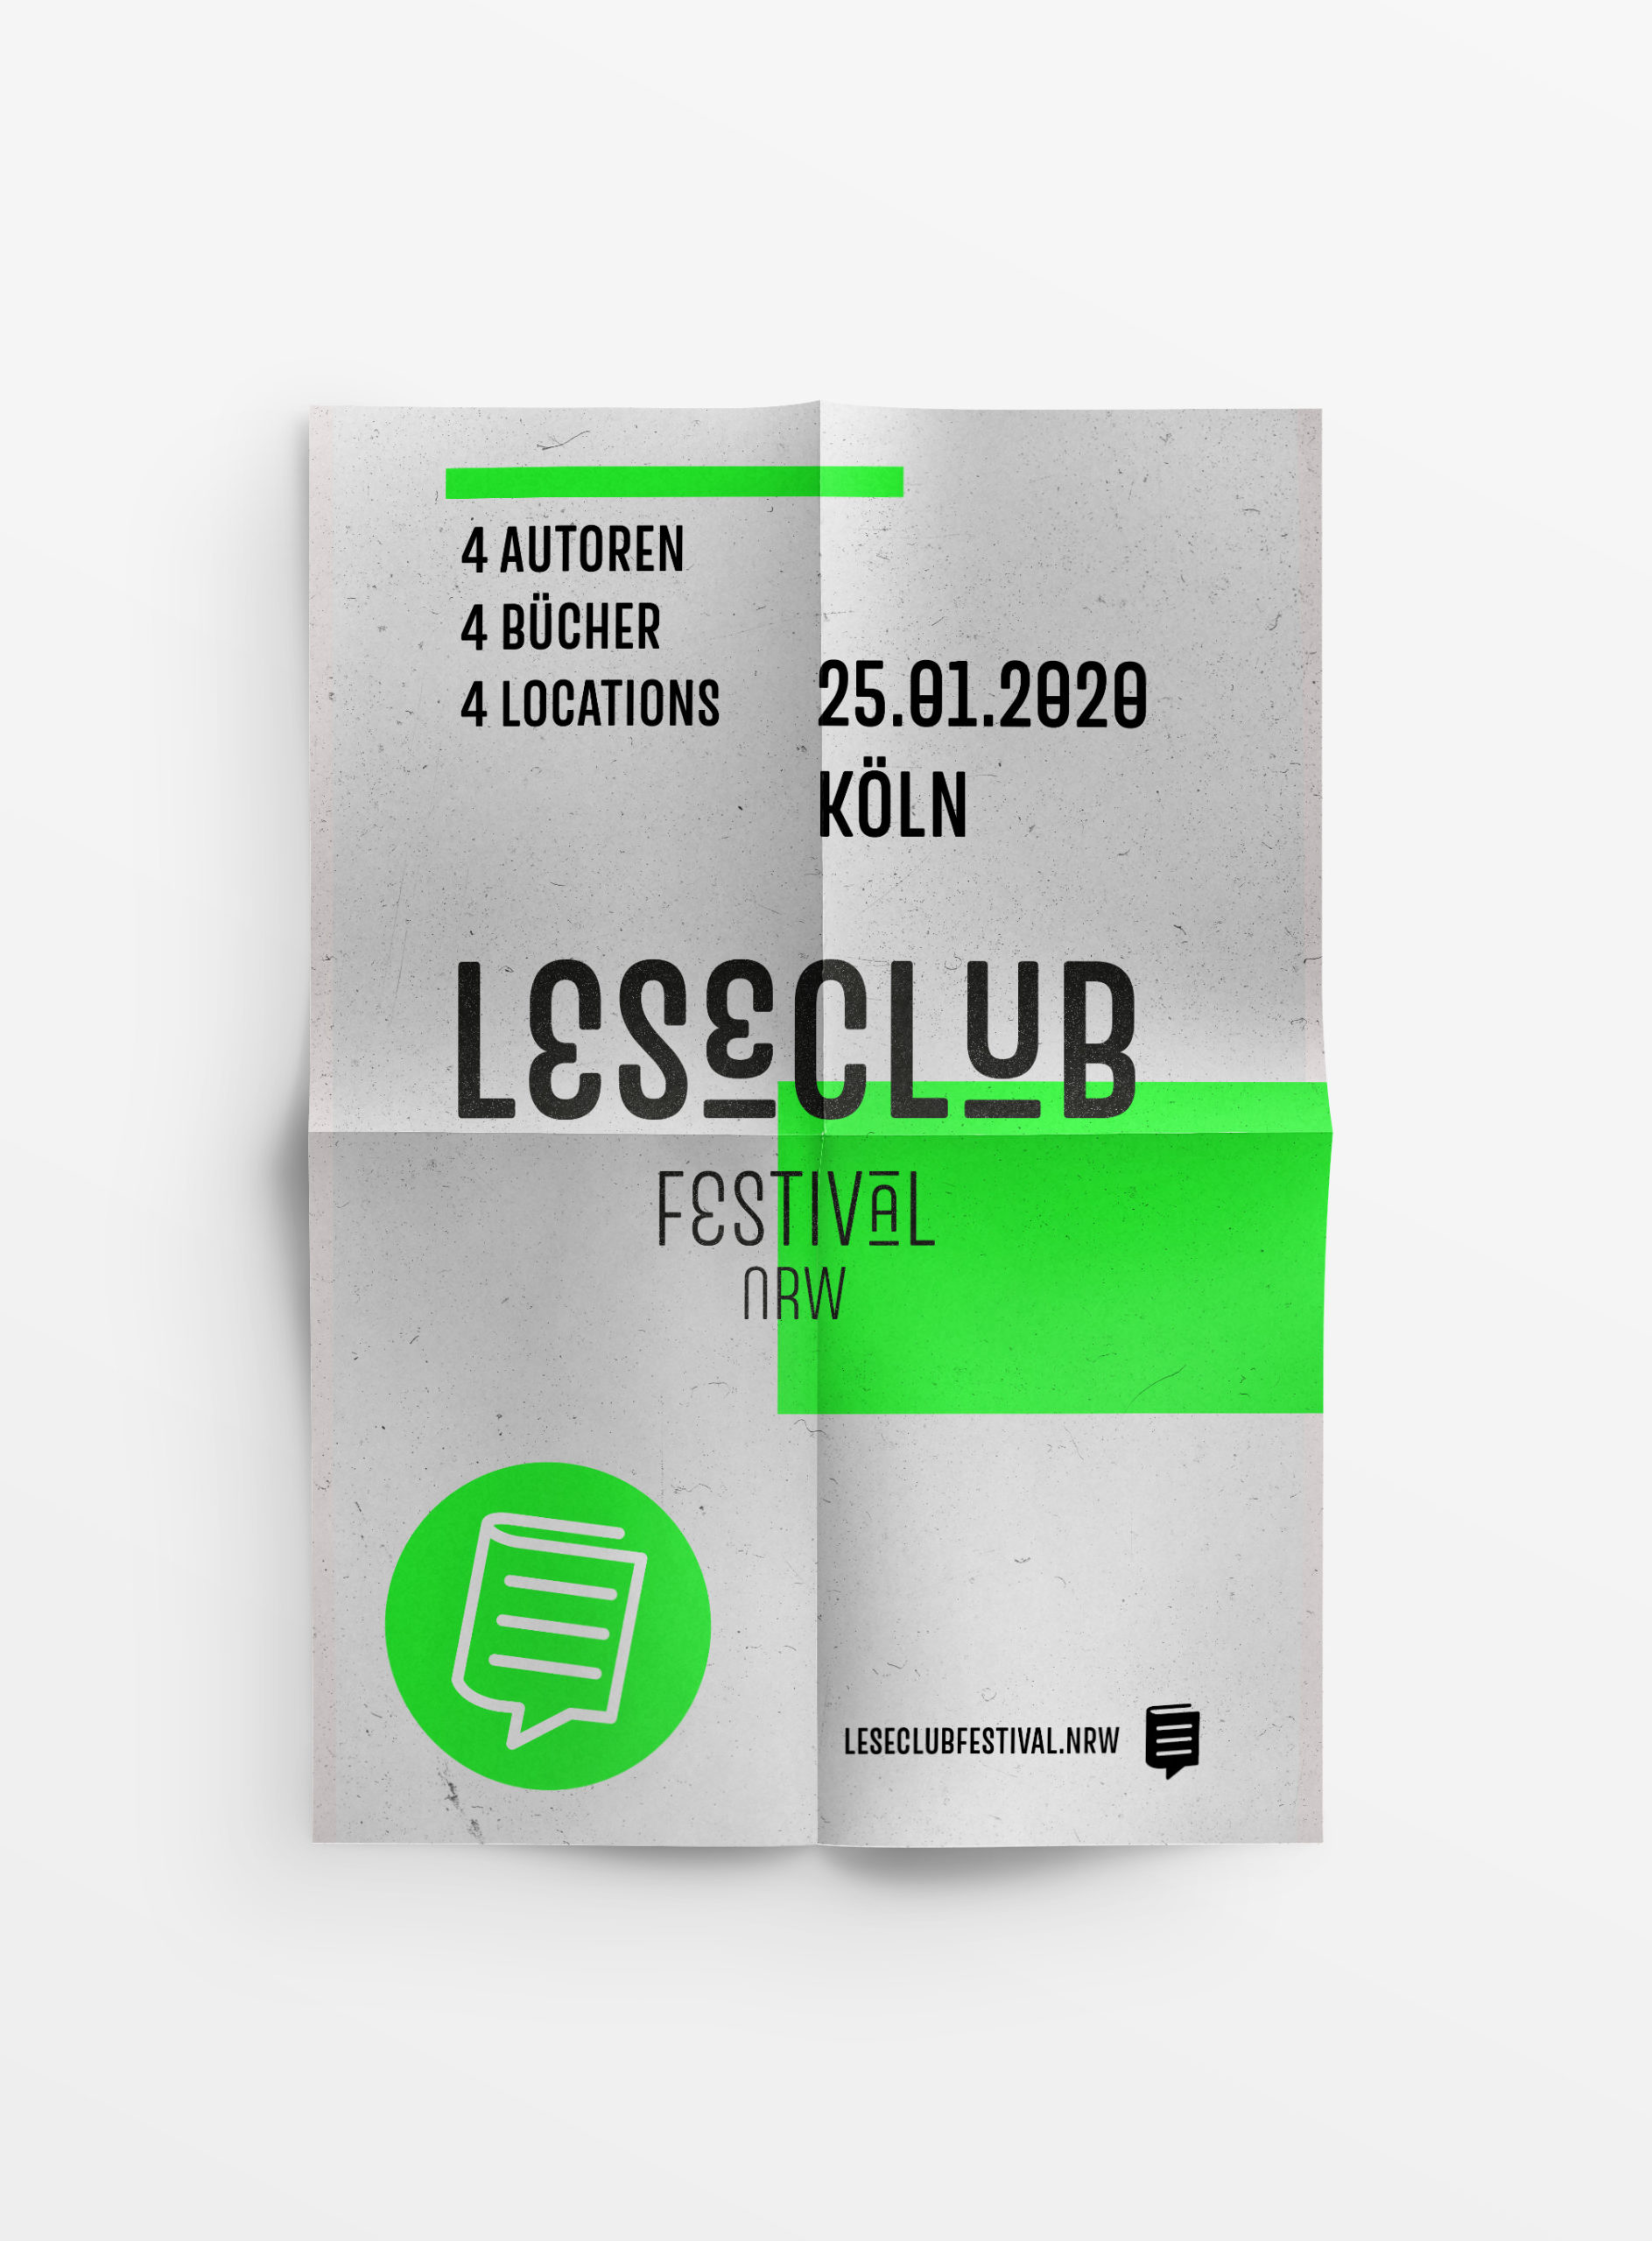 Leseclub_Festival_Anwendung_plakat